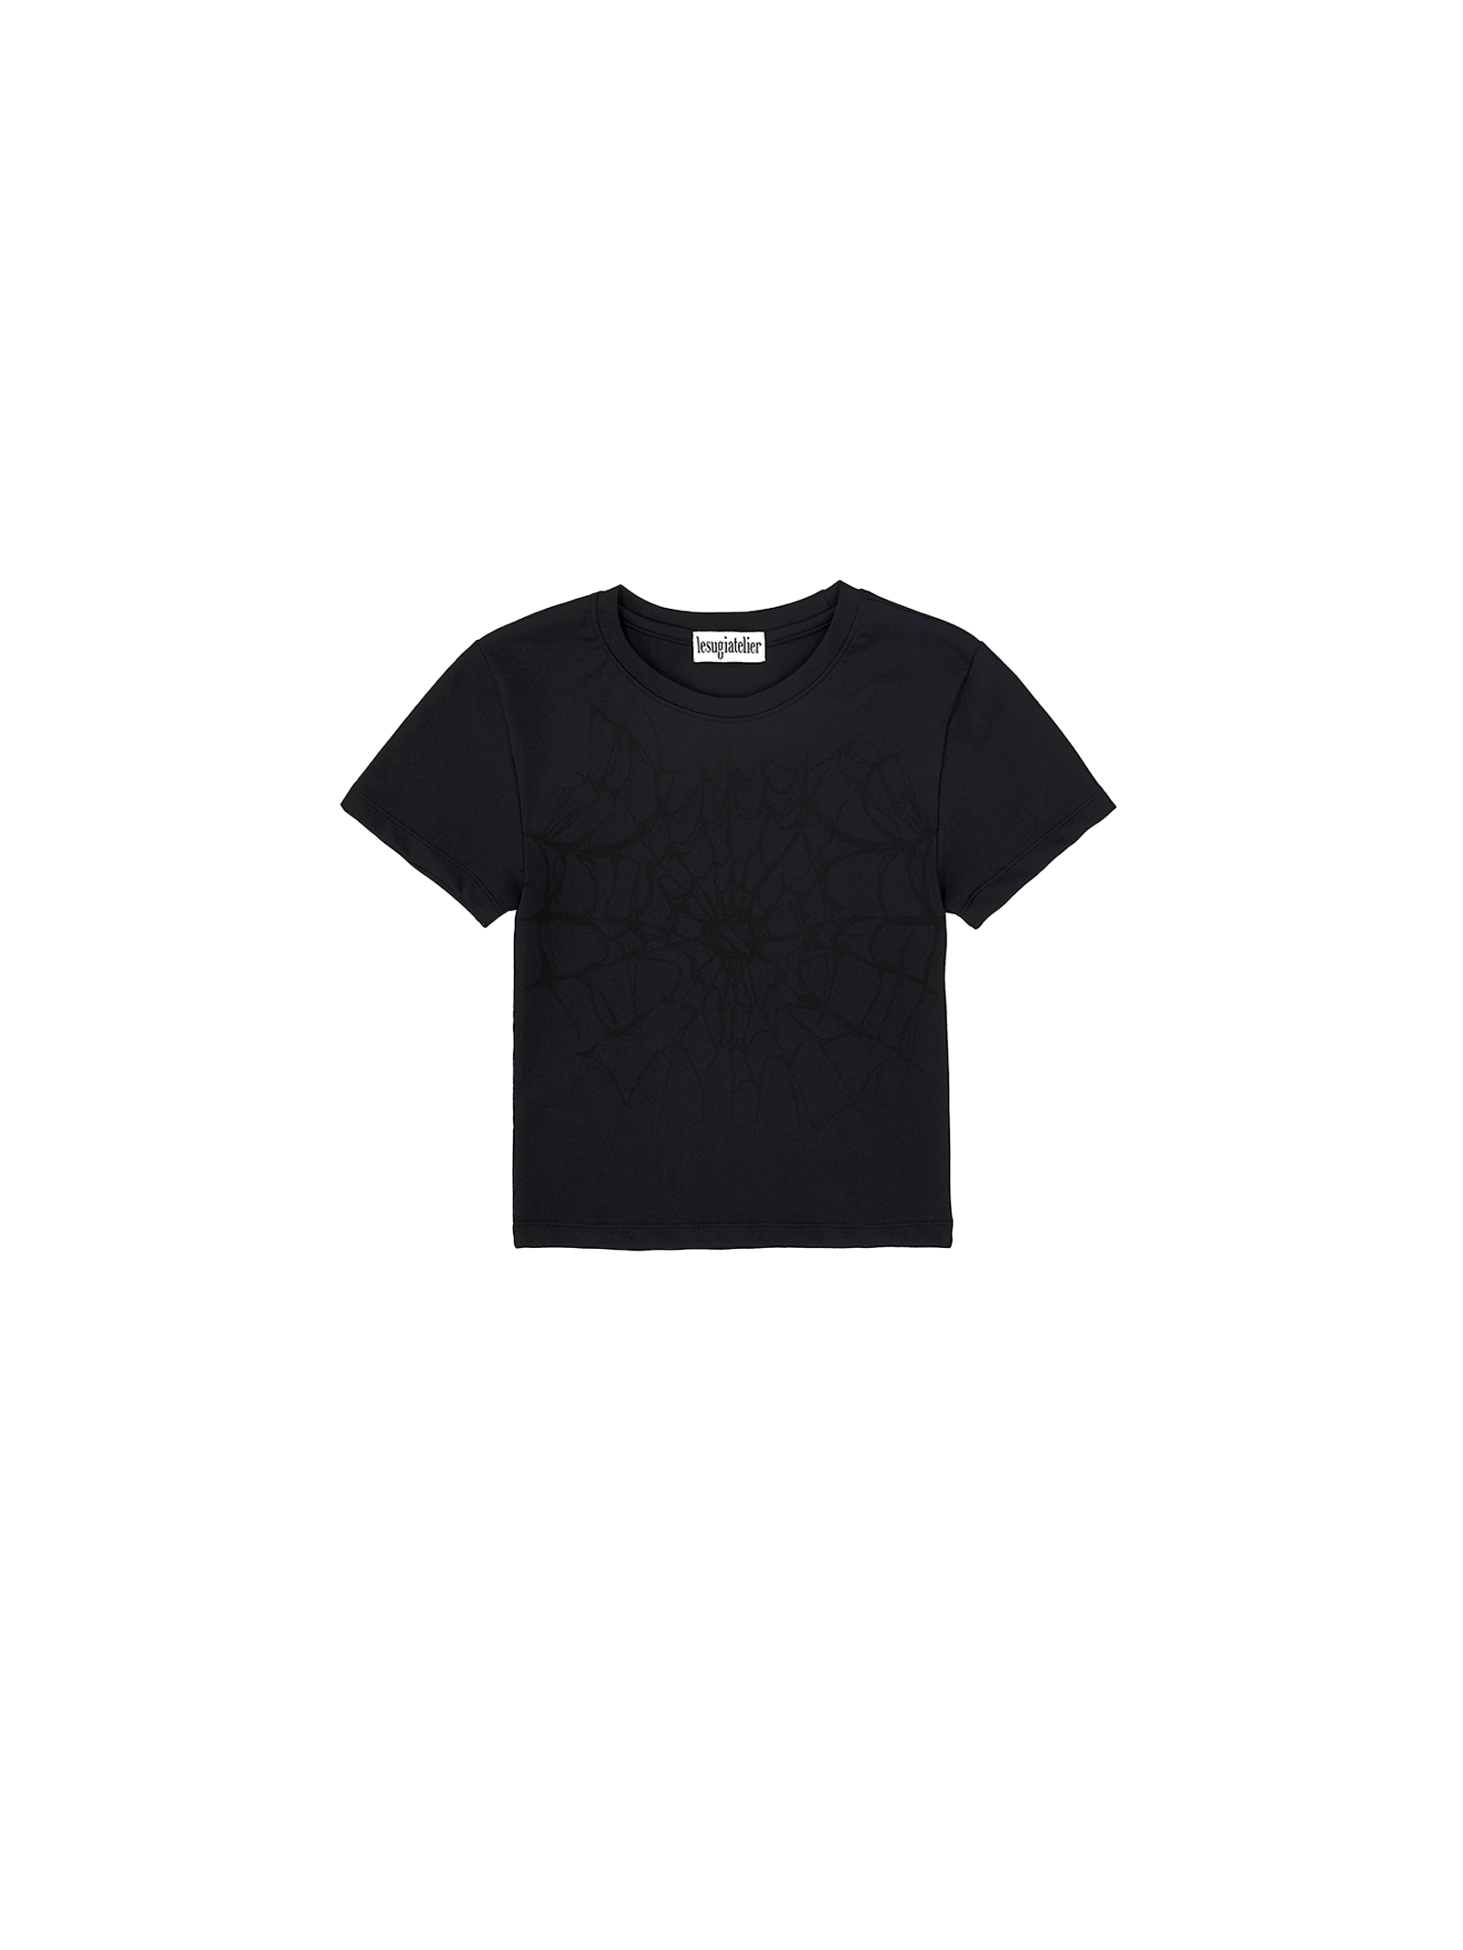 Spider Web Graphic T-Shirt / Black